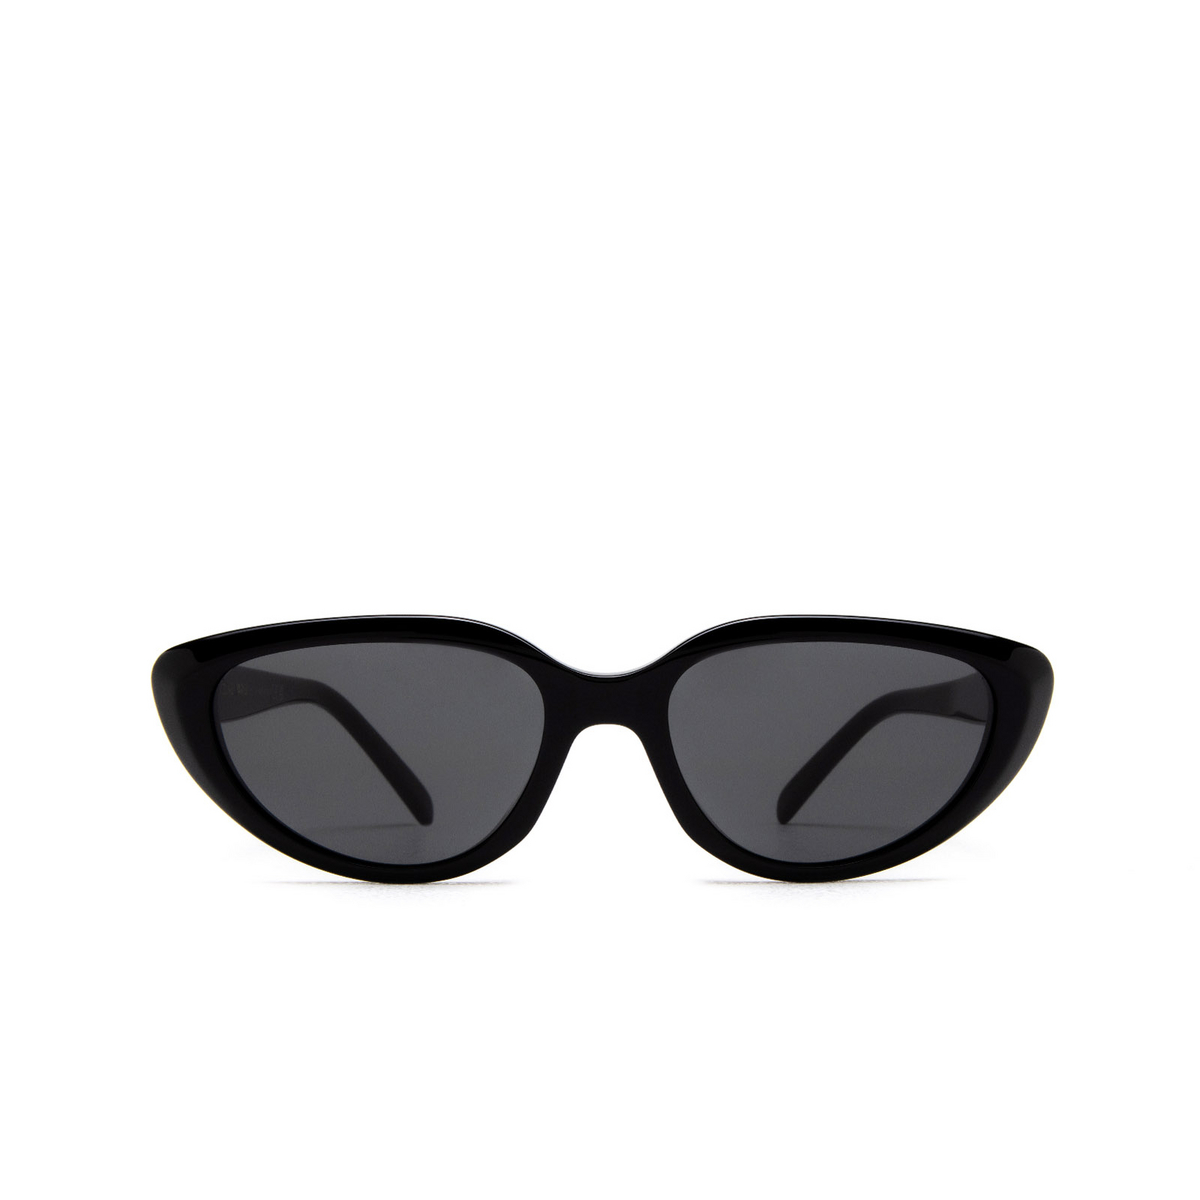 Celine THIN Sunglasses 01A Black - front view